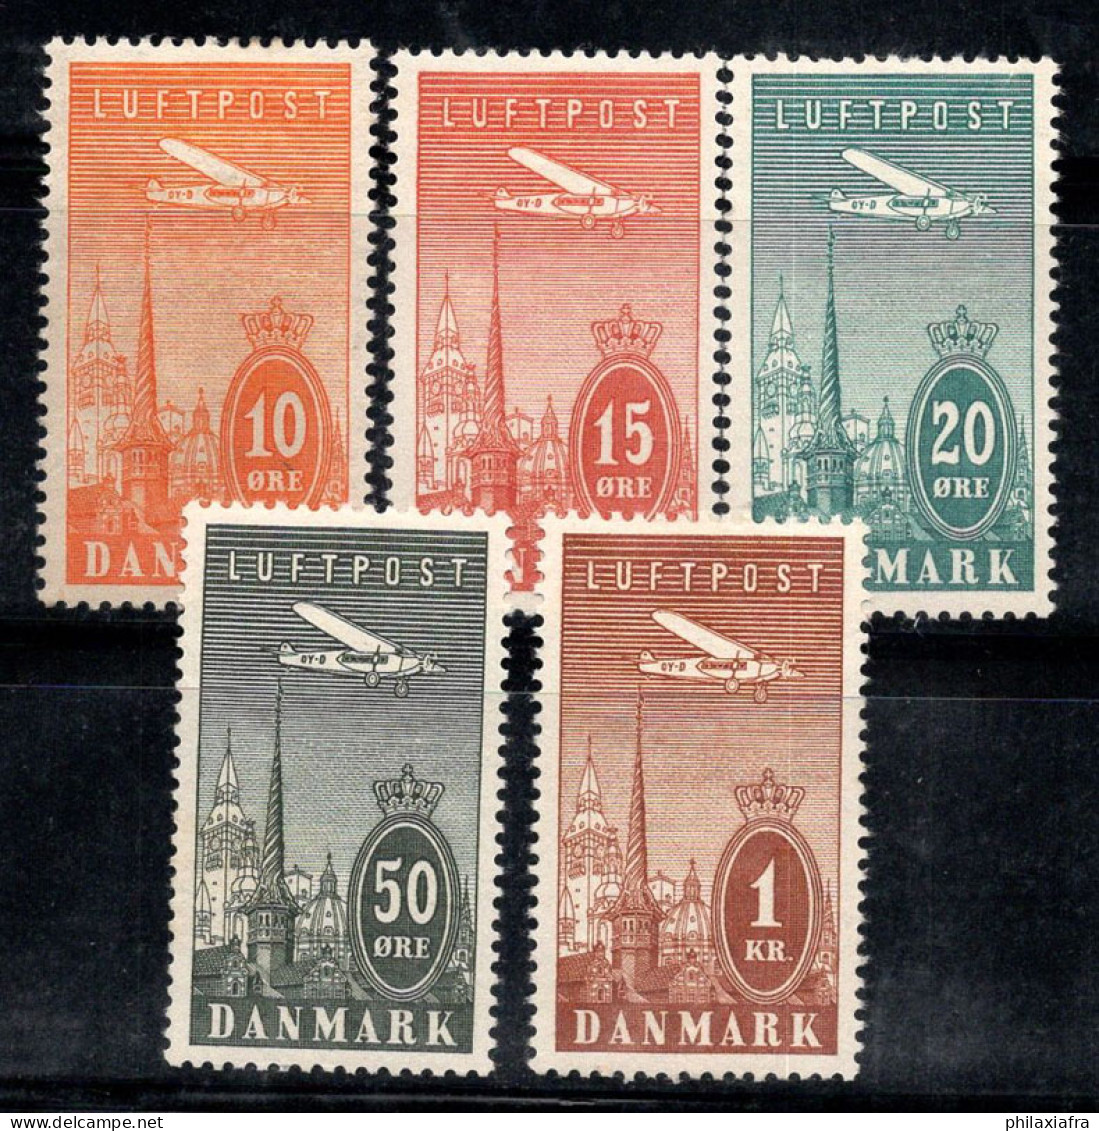 Danemark 1934 Mi. 217-221 Neuf * MH 100% Poste Aérienne - Poste Aérienne